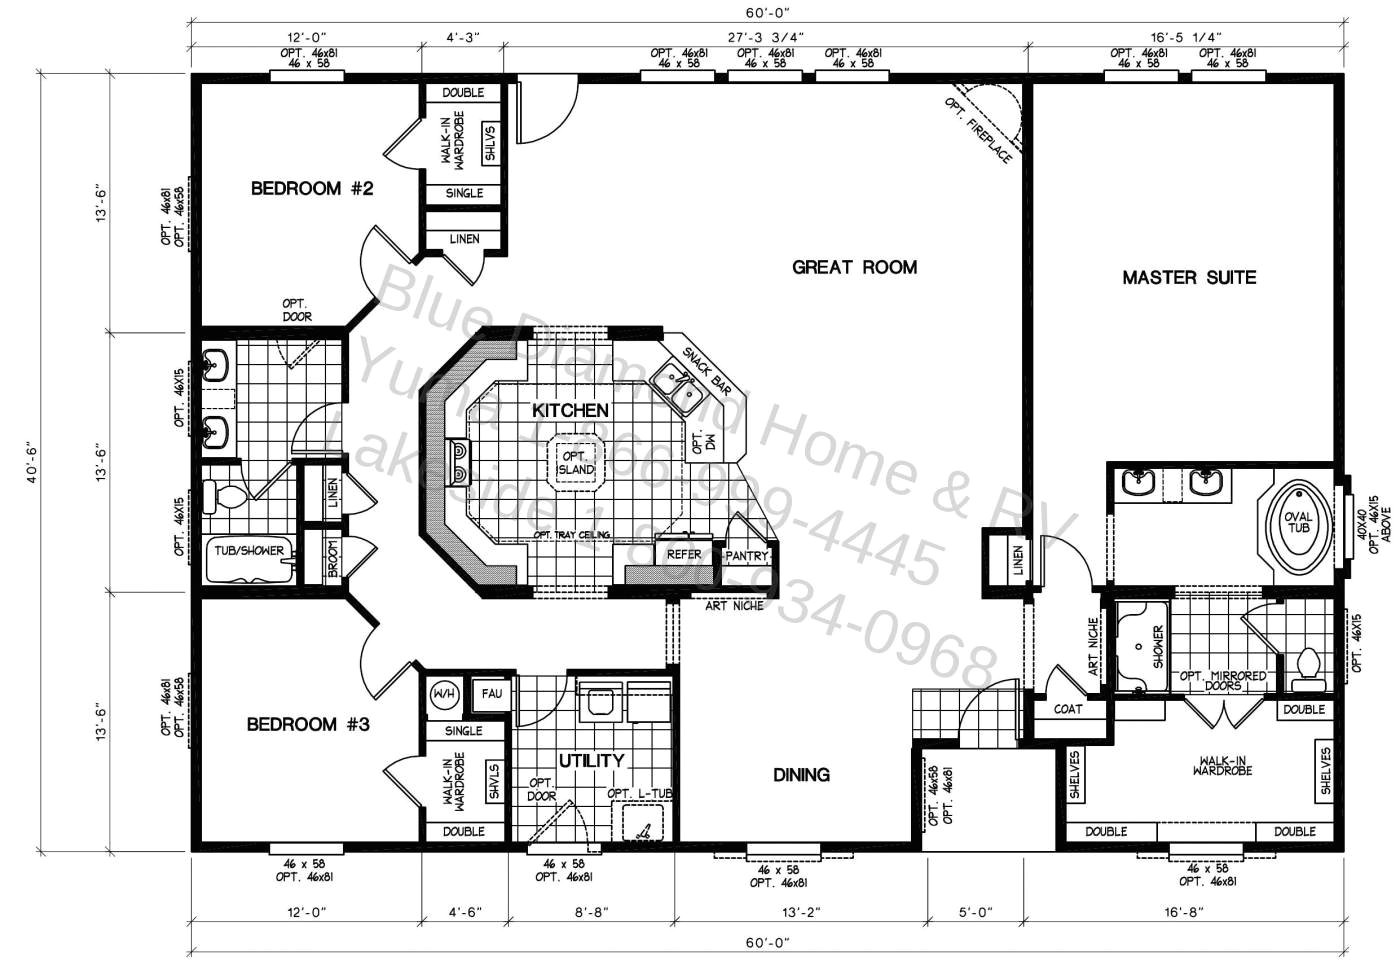 fleetwood mobile home floor plans unique manufactured homes marlette floor plans home triple wide 6 bedroom